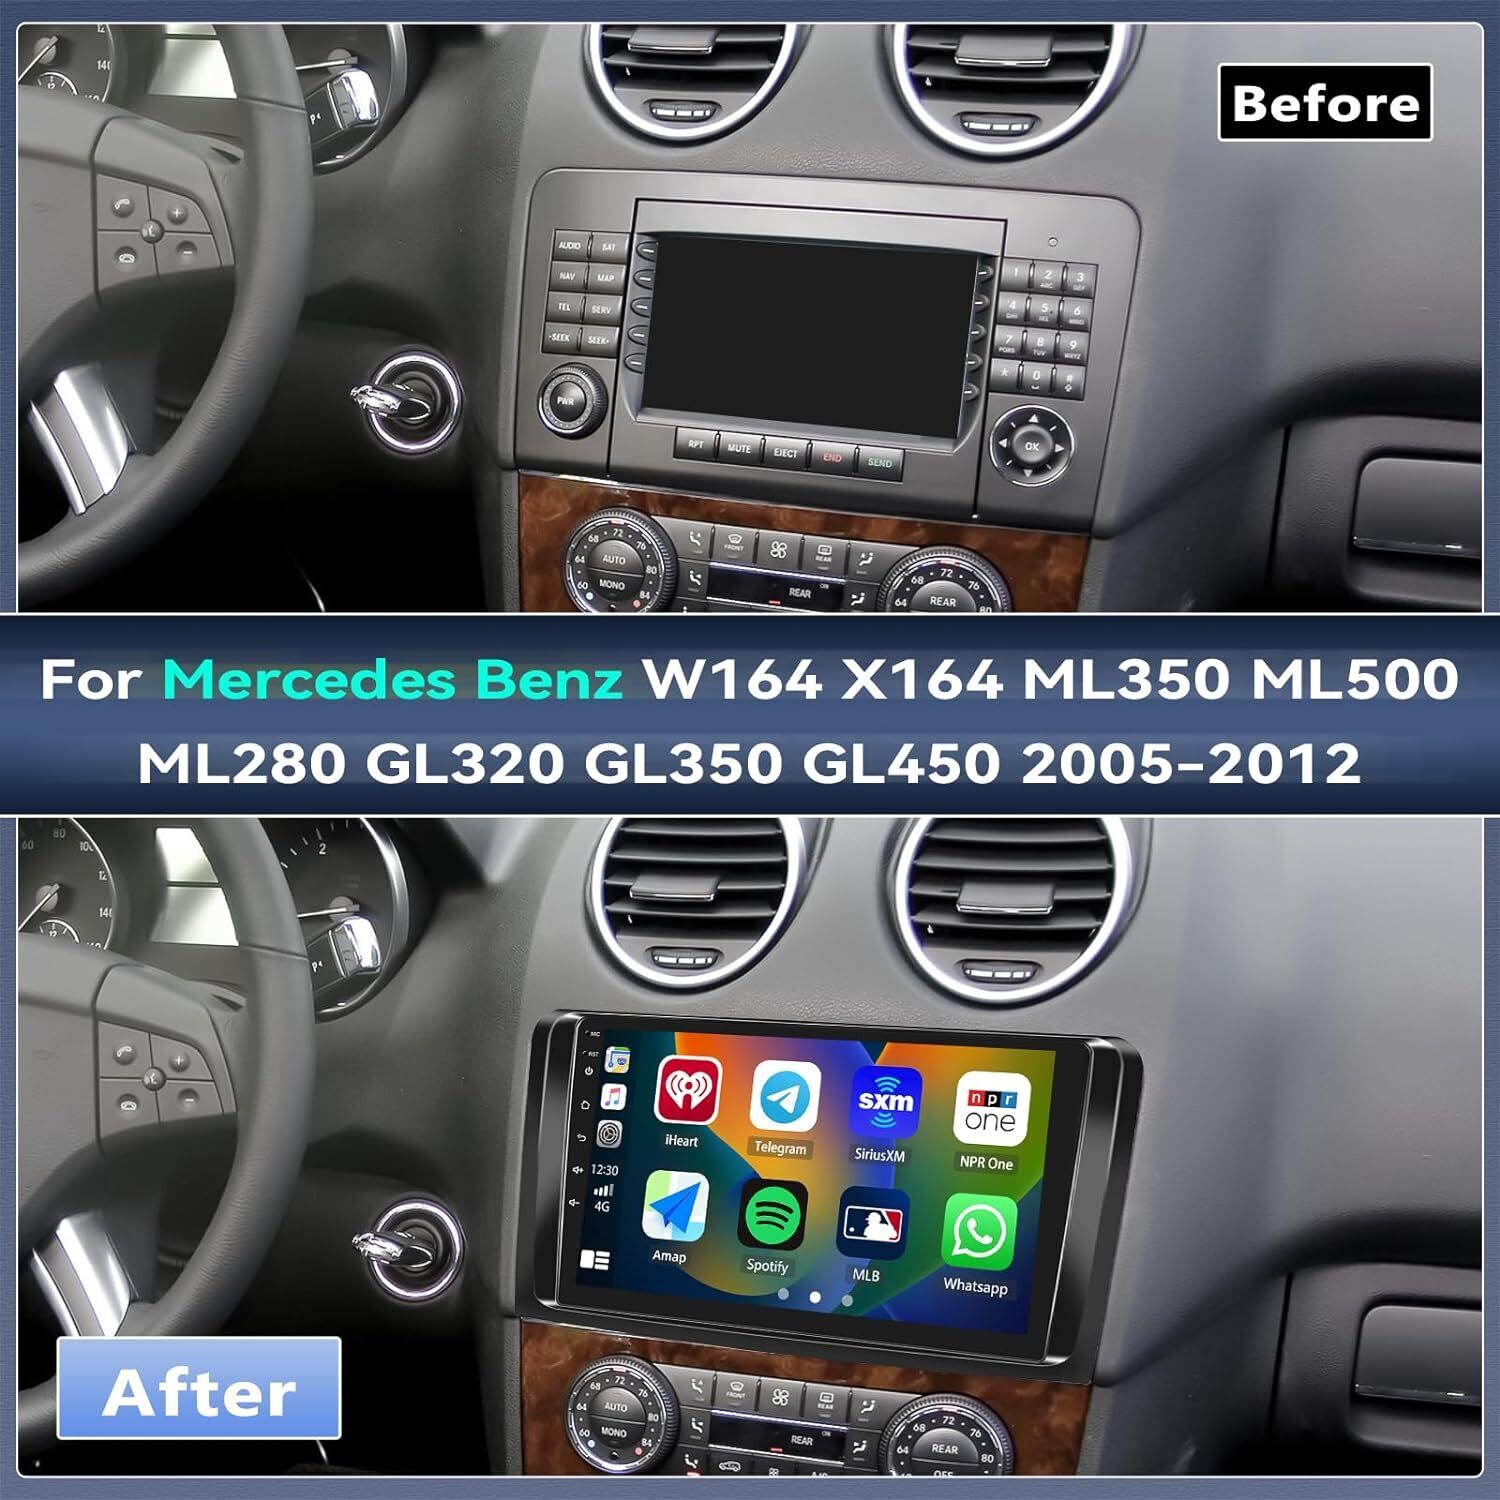 For Mercedes Benz W164 ML500 GL350 GL450 Android 13 Carplay Car Stereo Radio GPS